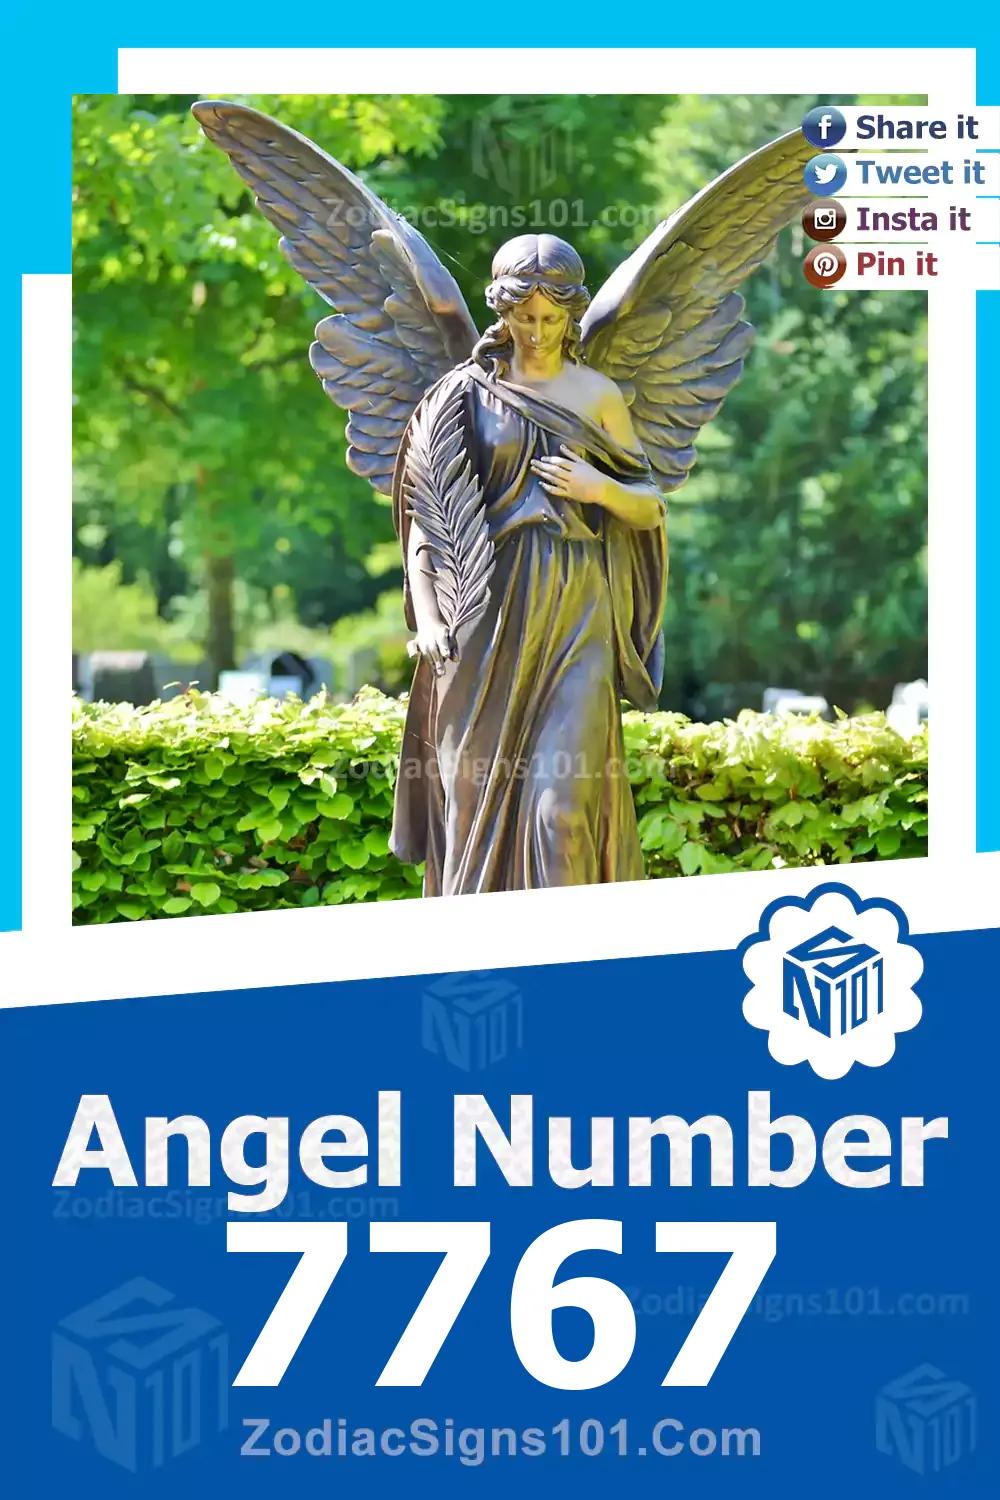 7767-Angel-Number-Meaning.jpg